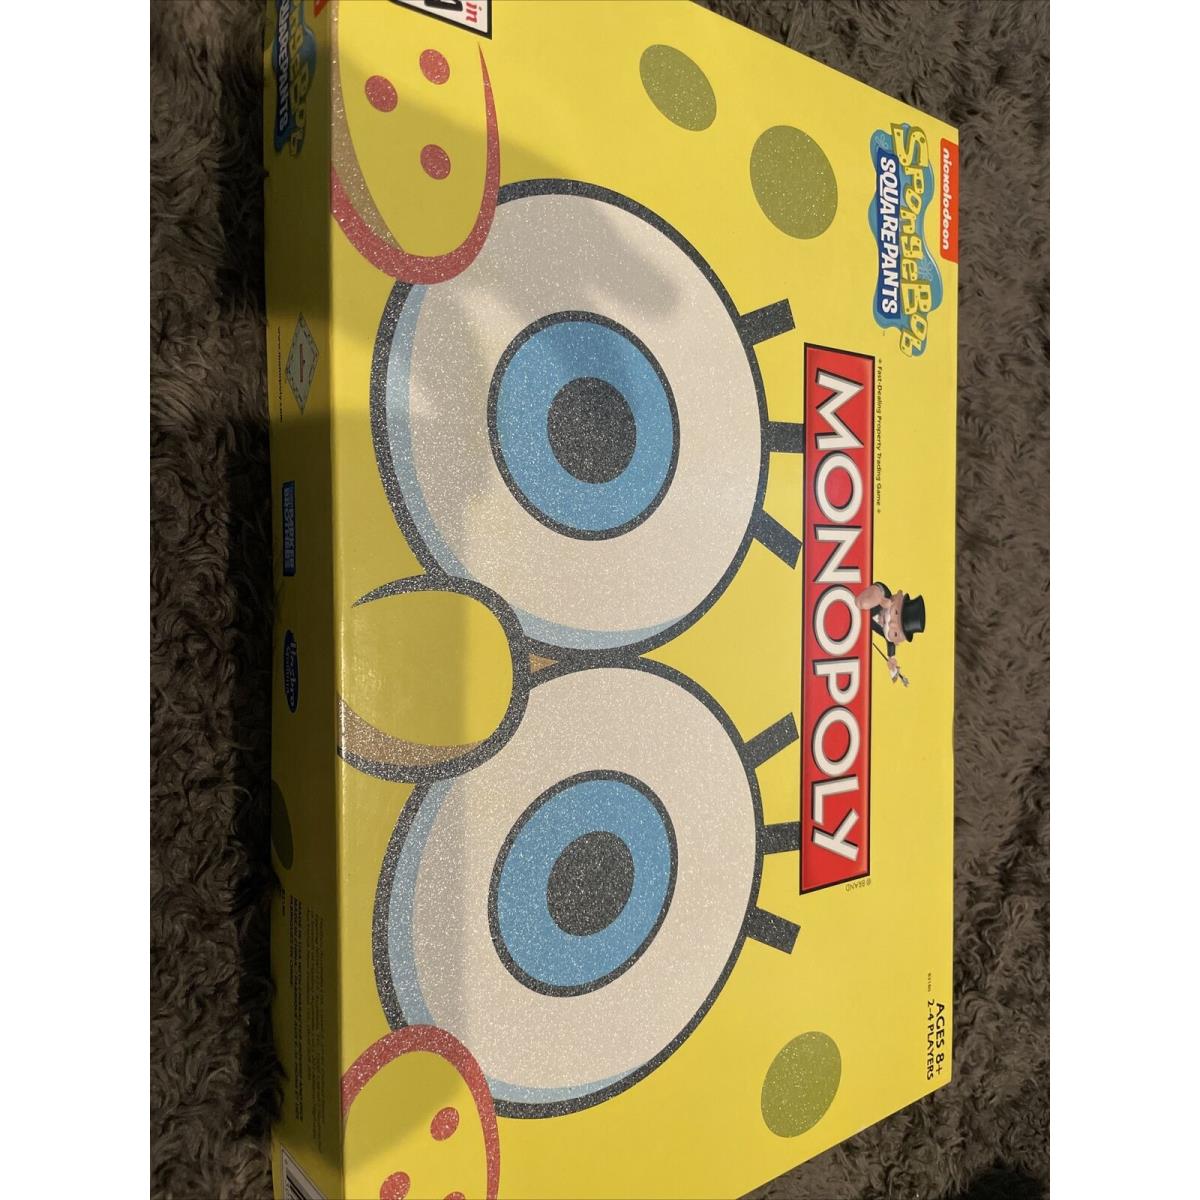 Spongebob Squarepants Monopoly Game Nickelodeon Edition 2014